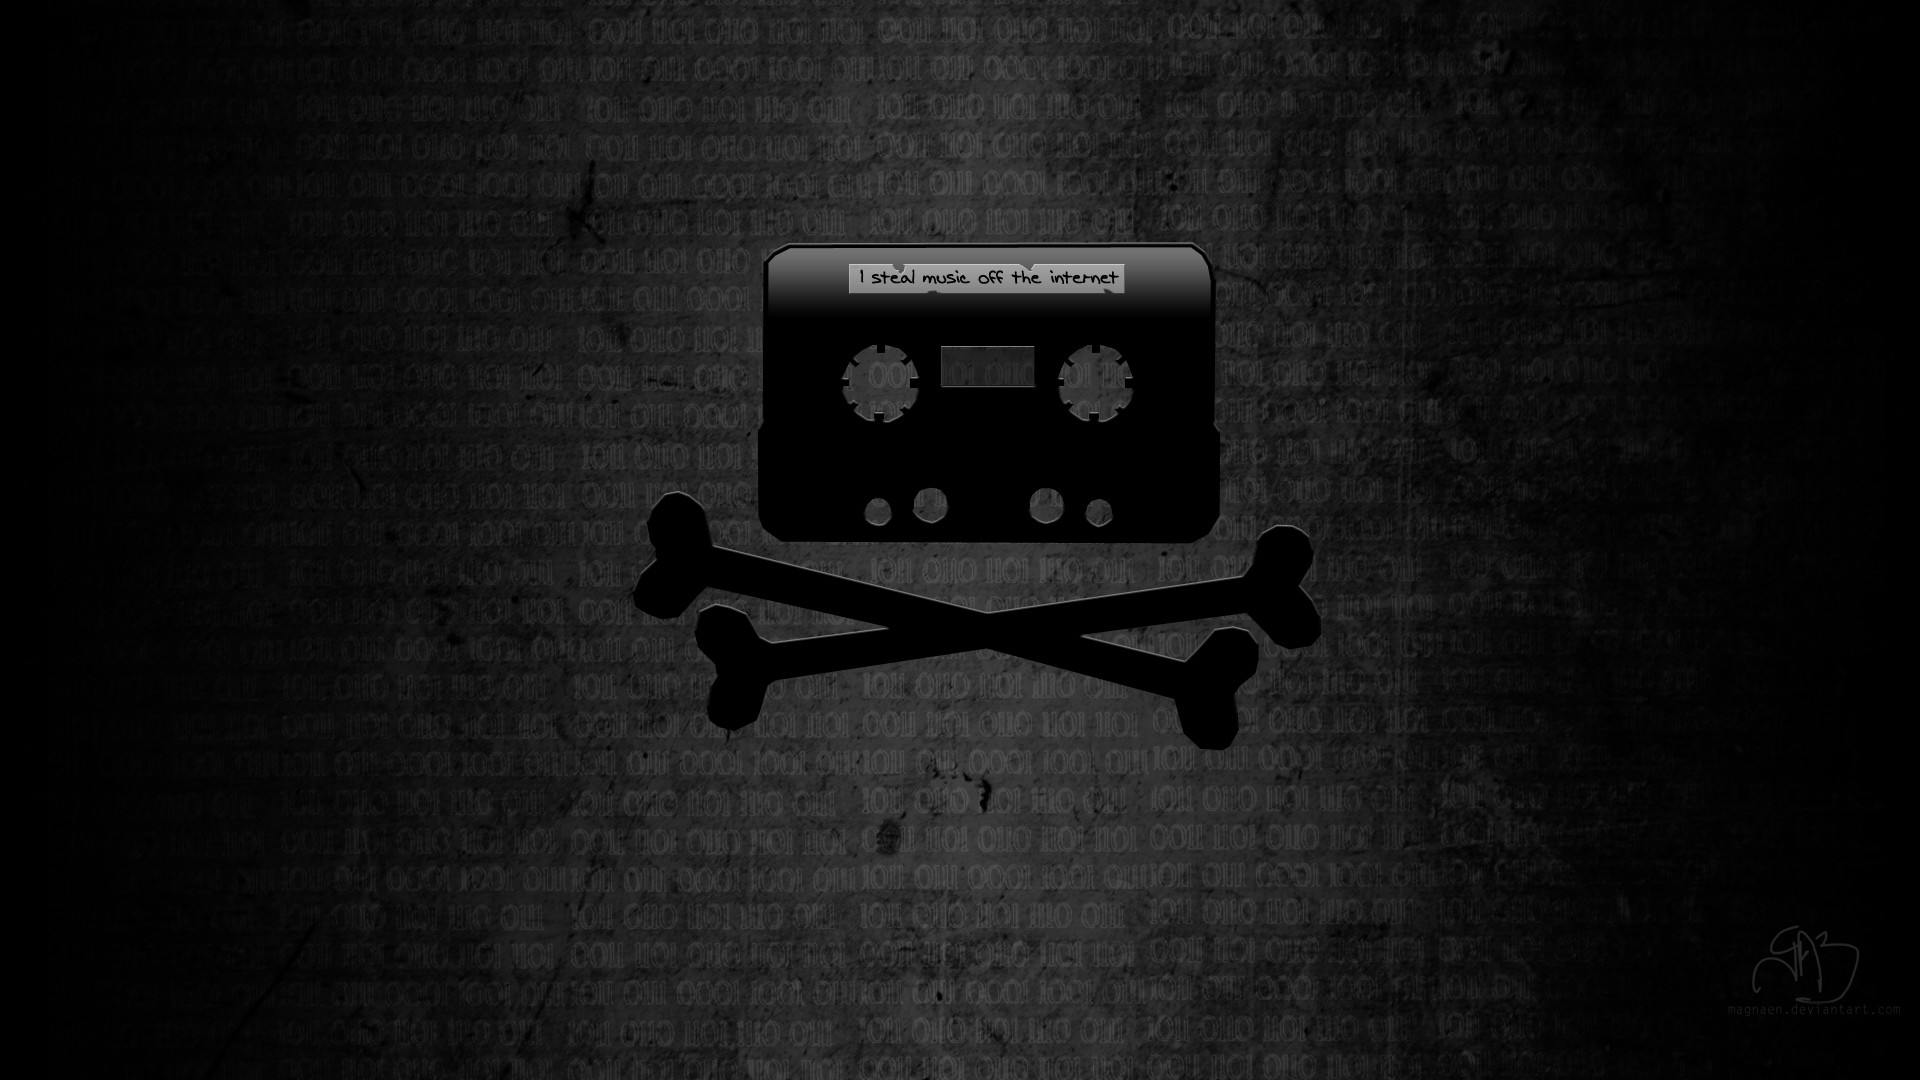 1920x1080 cassette, The Pirate Bay, piracy, skull and crossbones - Free Wallpaper /  WallpaperJam.com